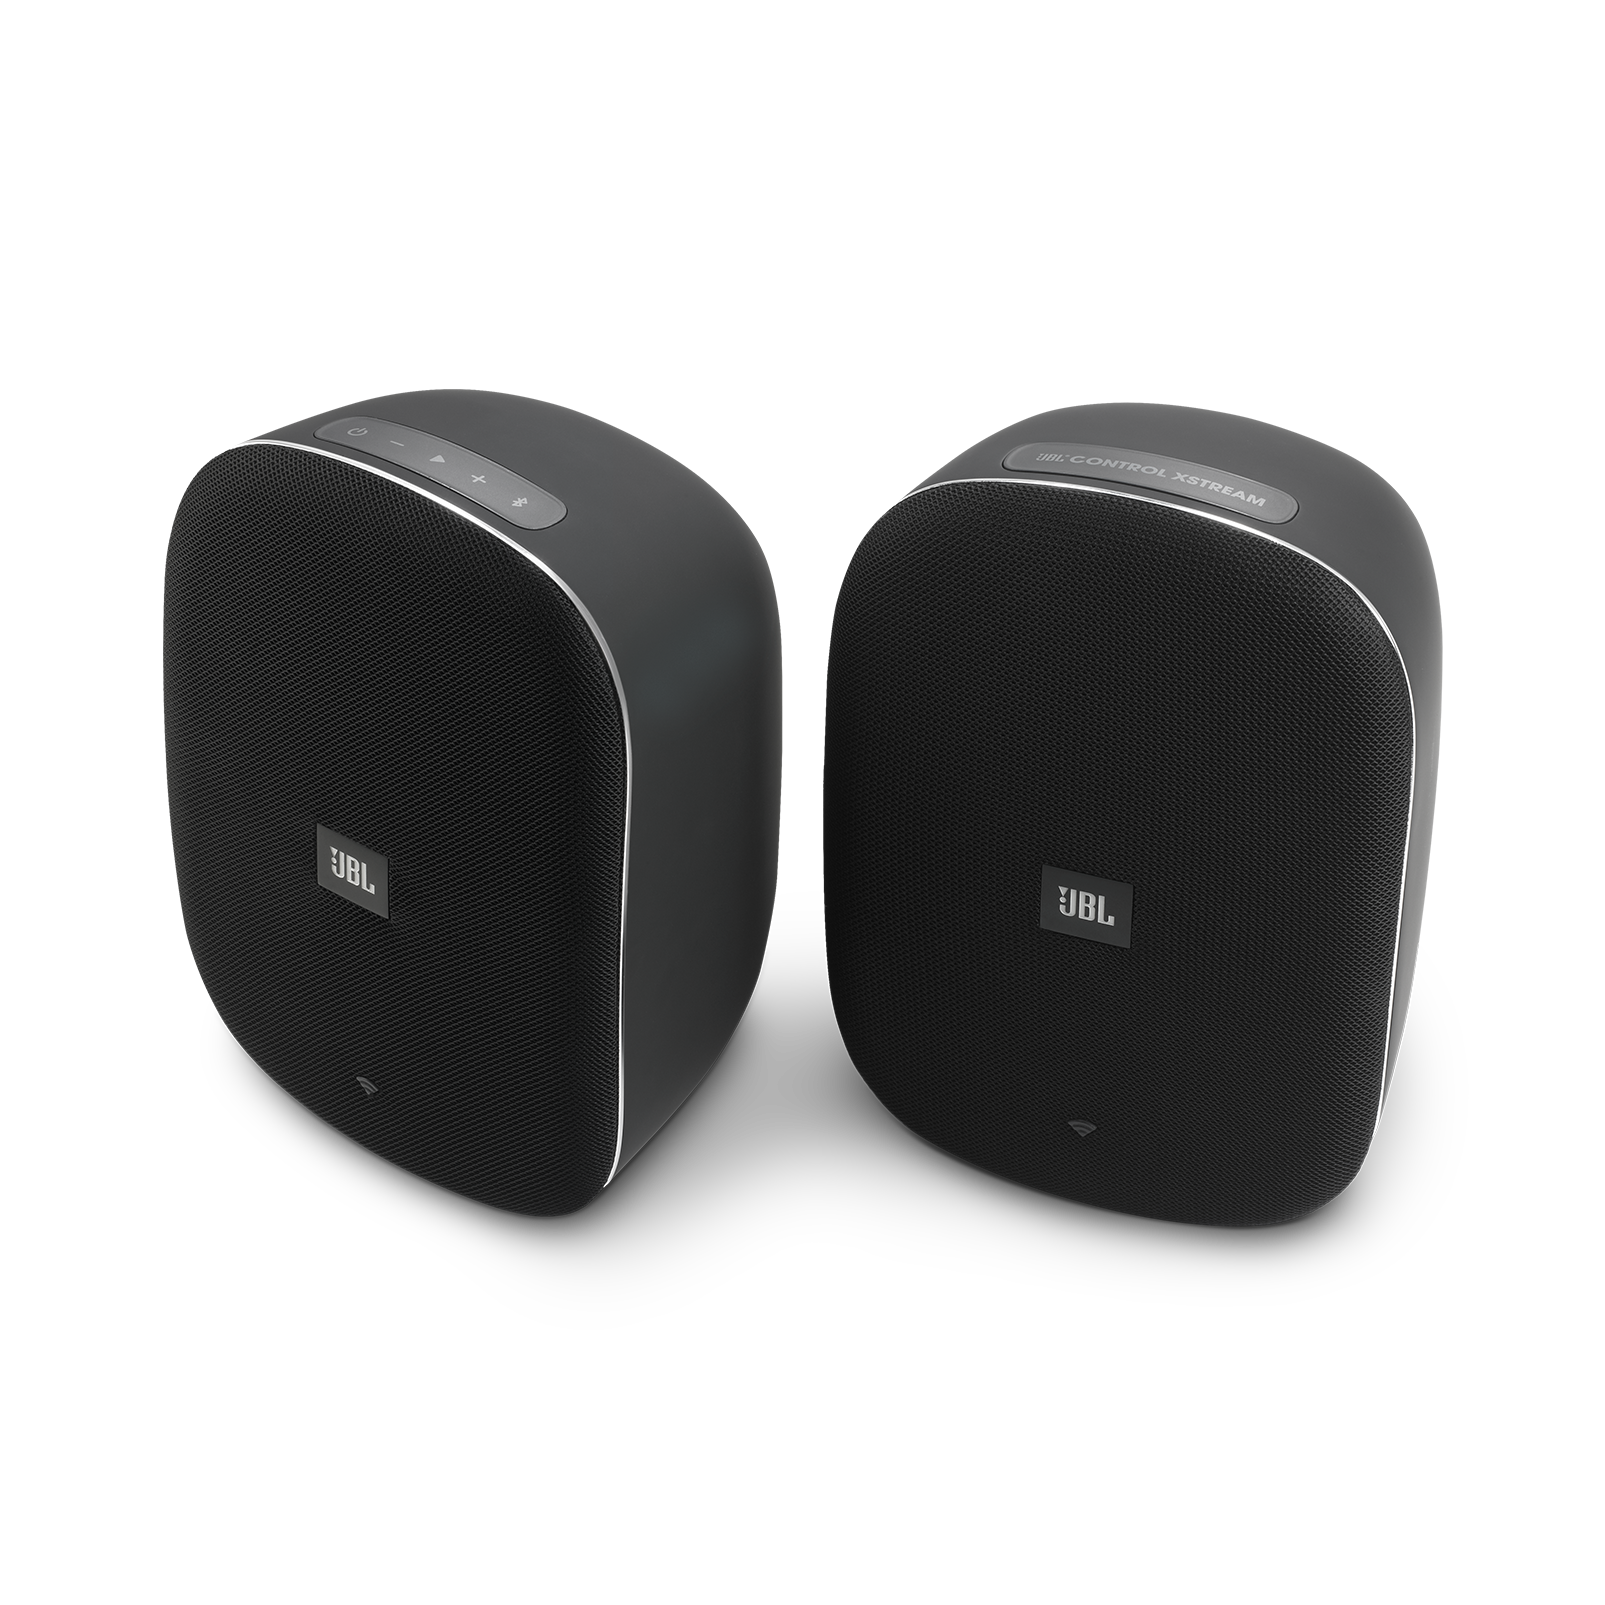 chromecast outdoor speakers